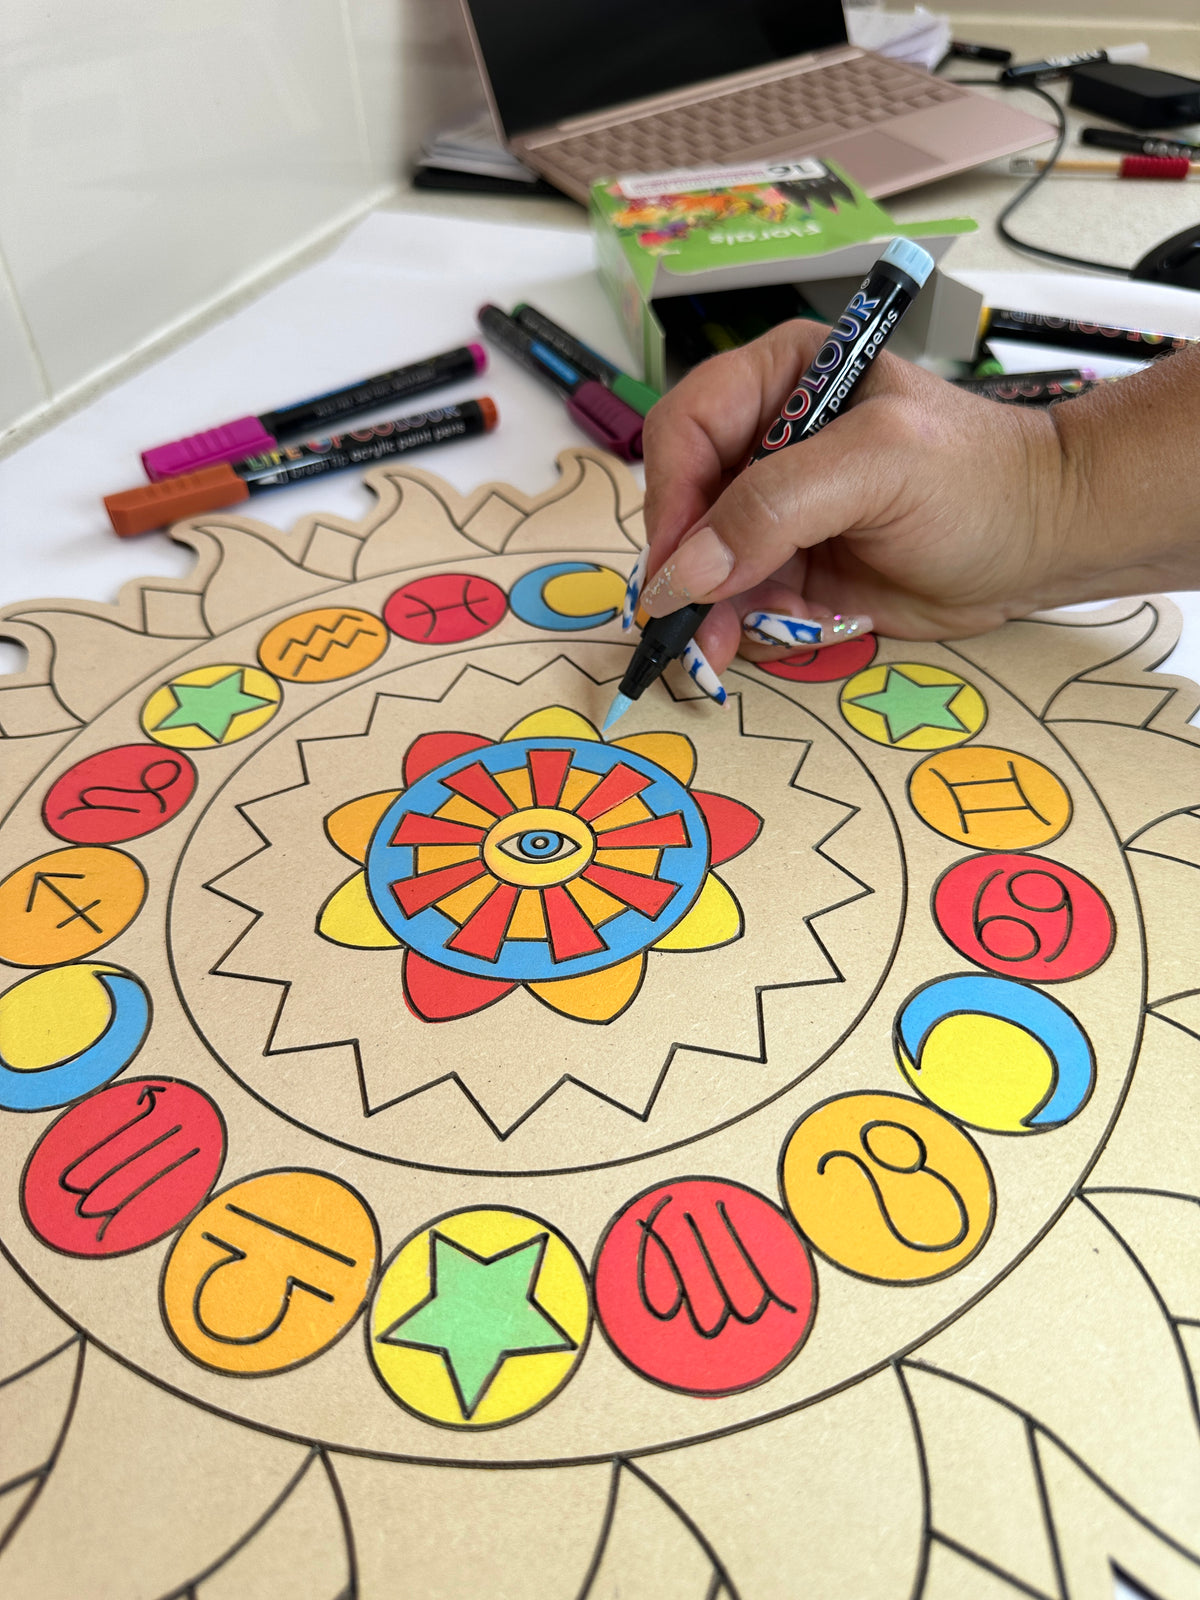 Life of Colour Zodiac Painting Kit - Florals